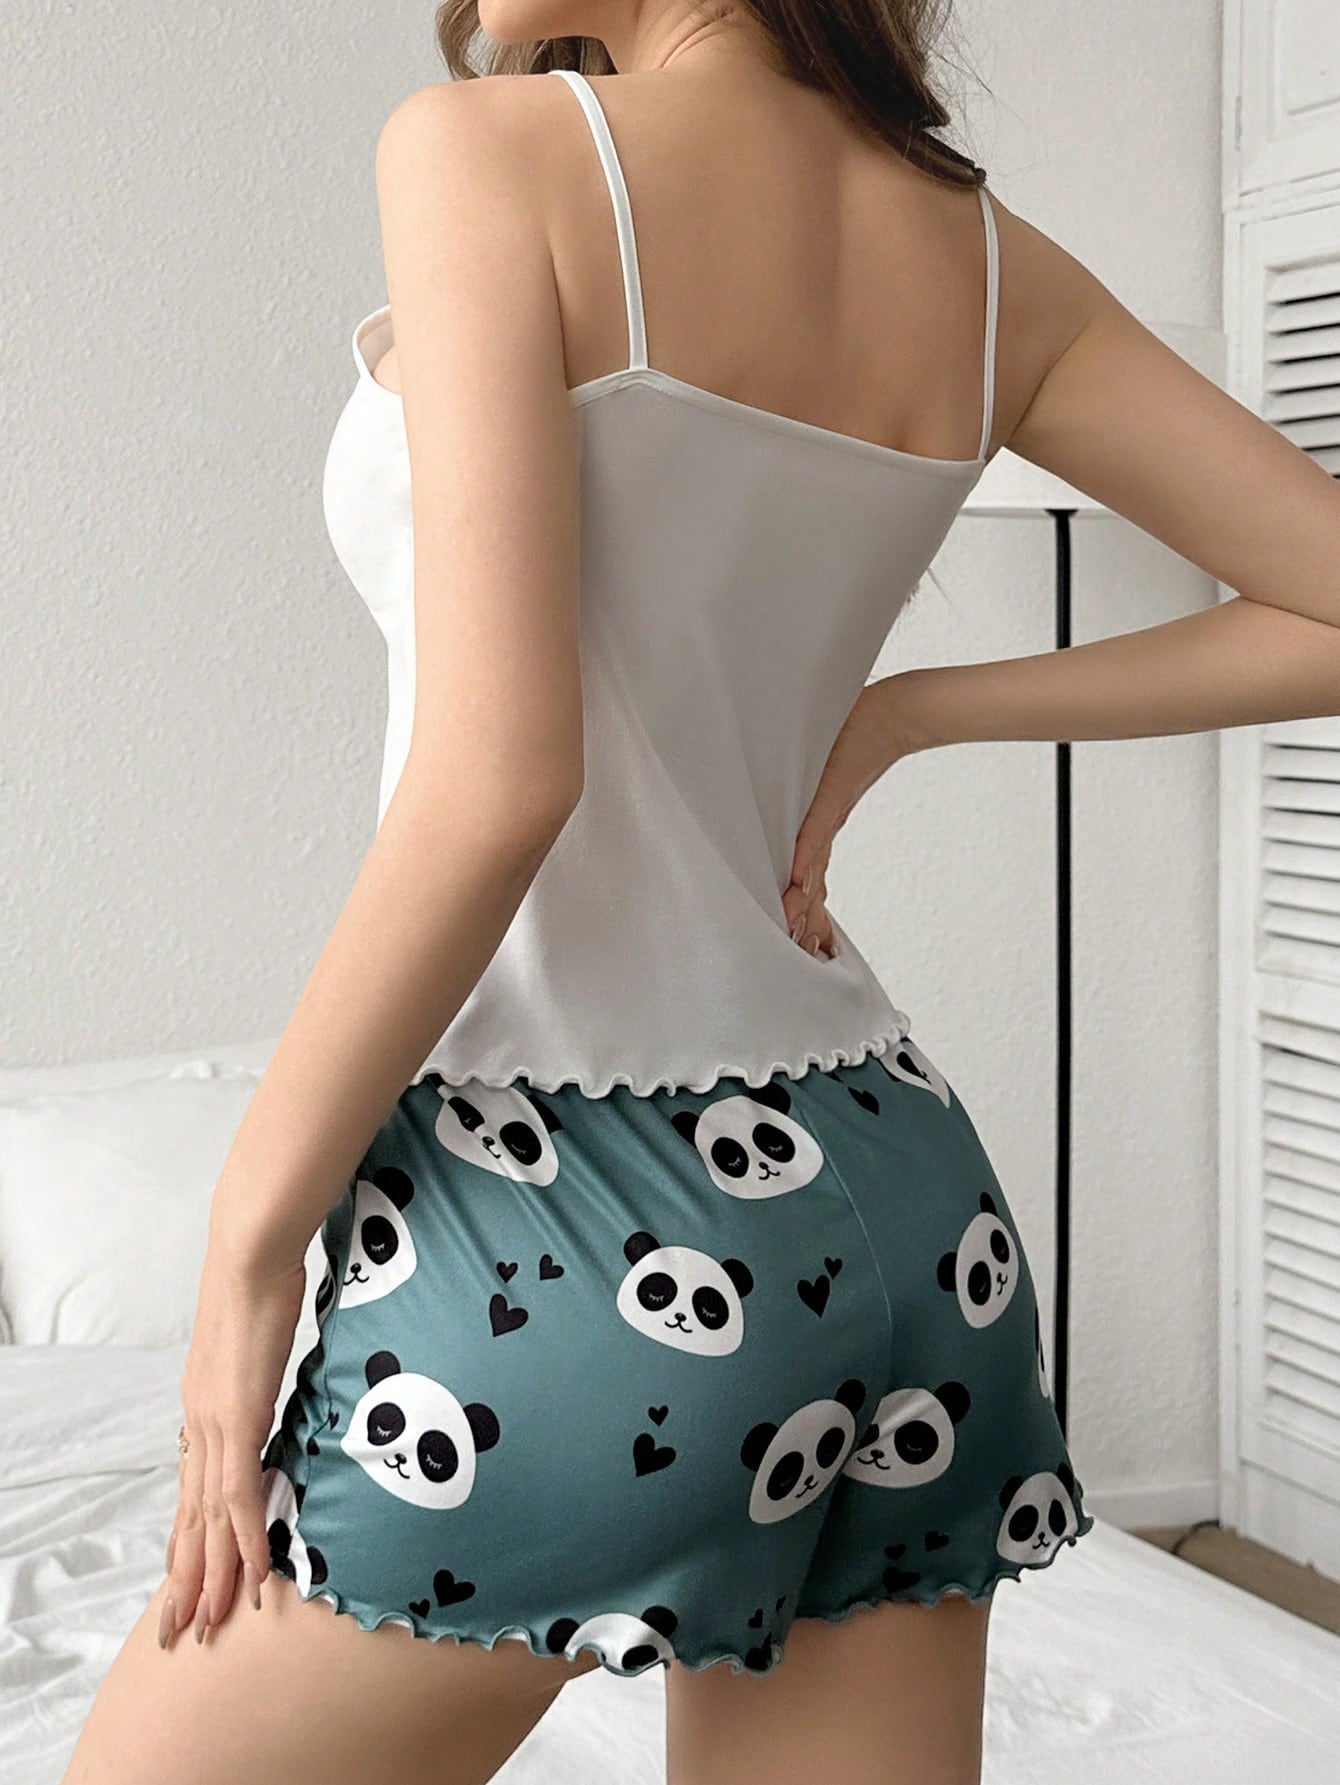 Panda & Letter Print Cami Top And Shorts Pajama Set - Negative Apparel